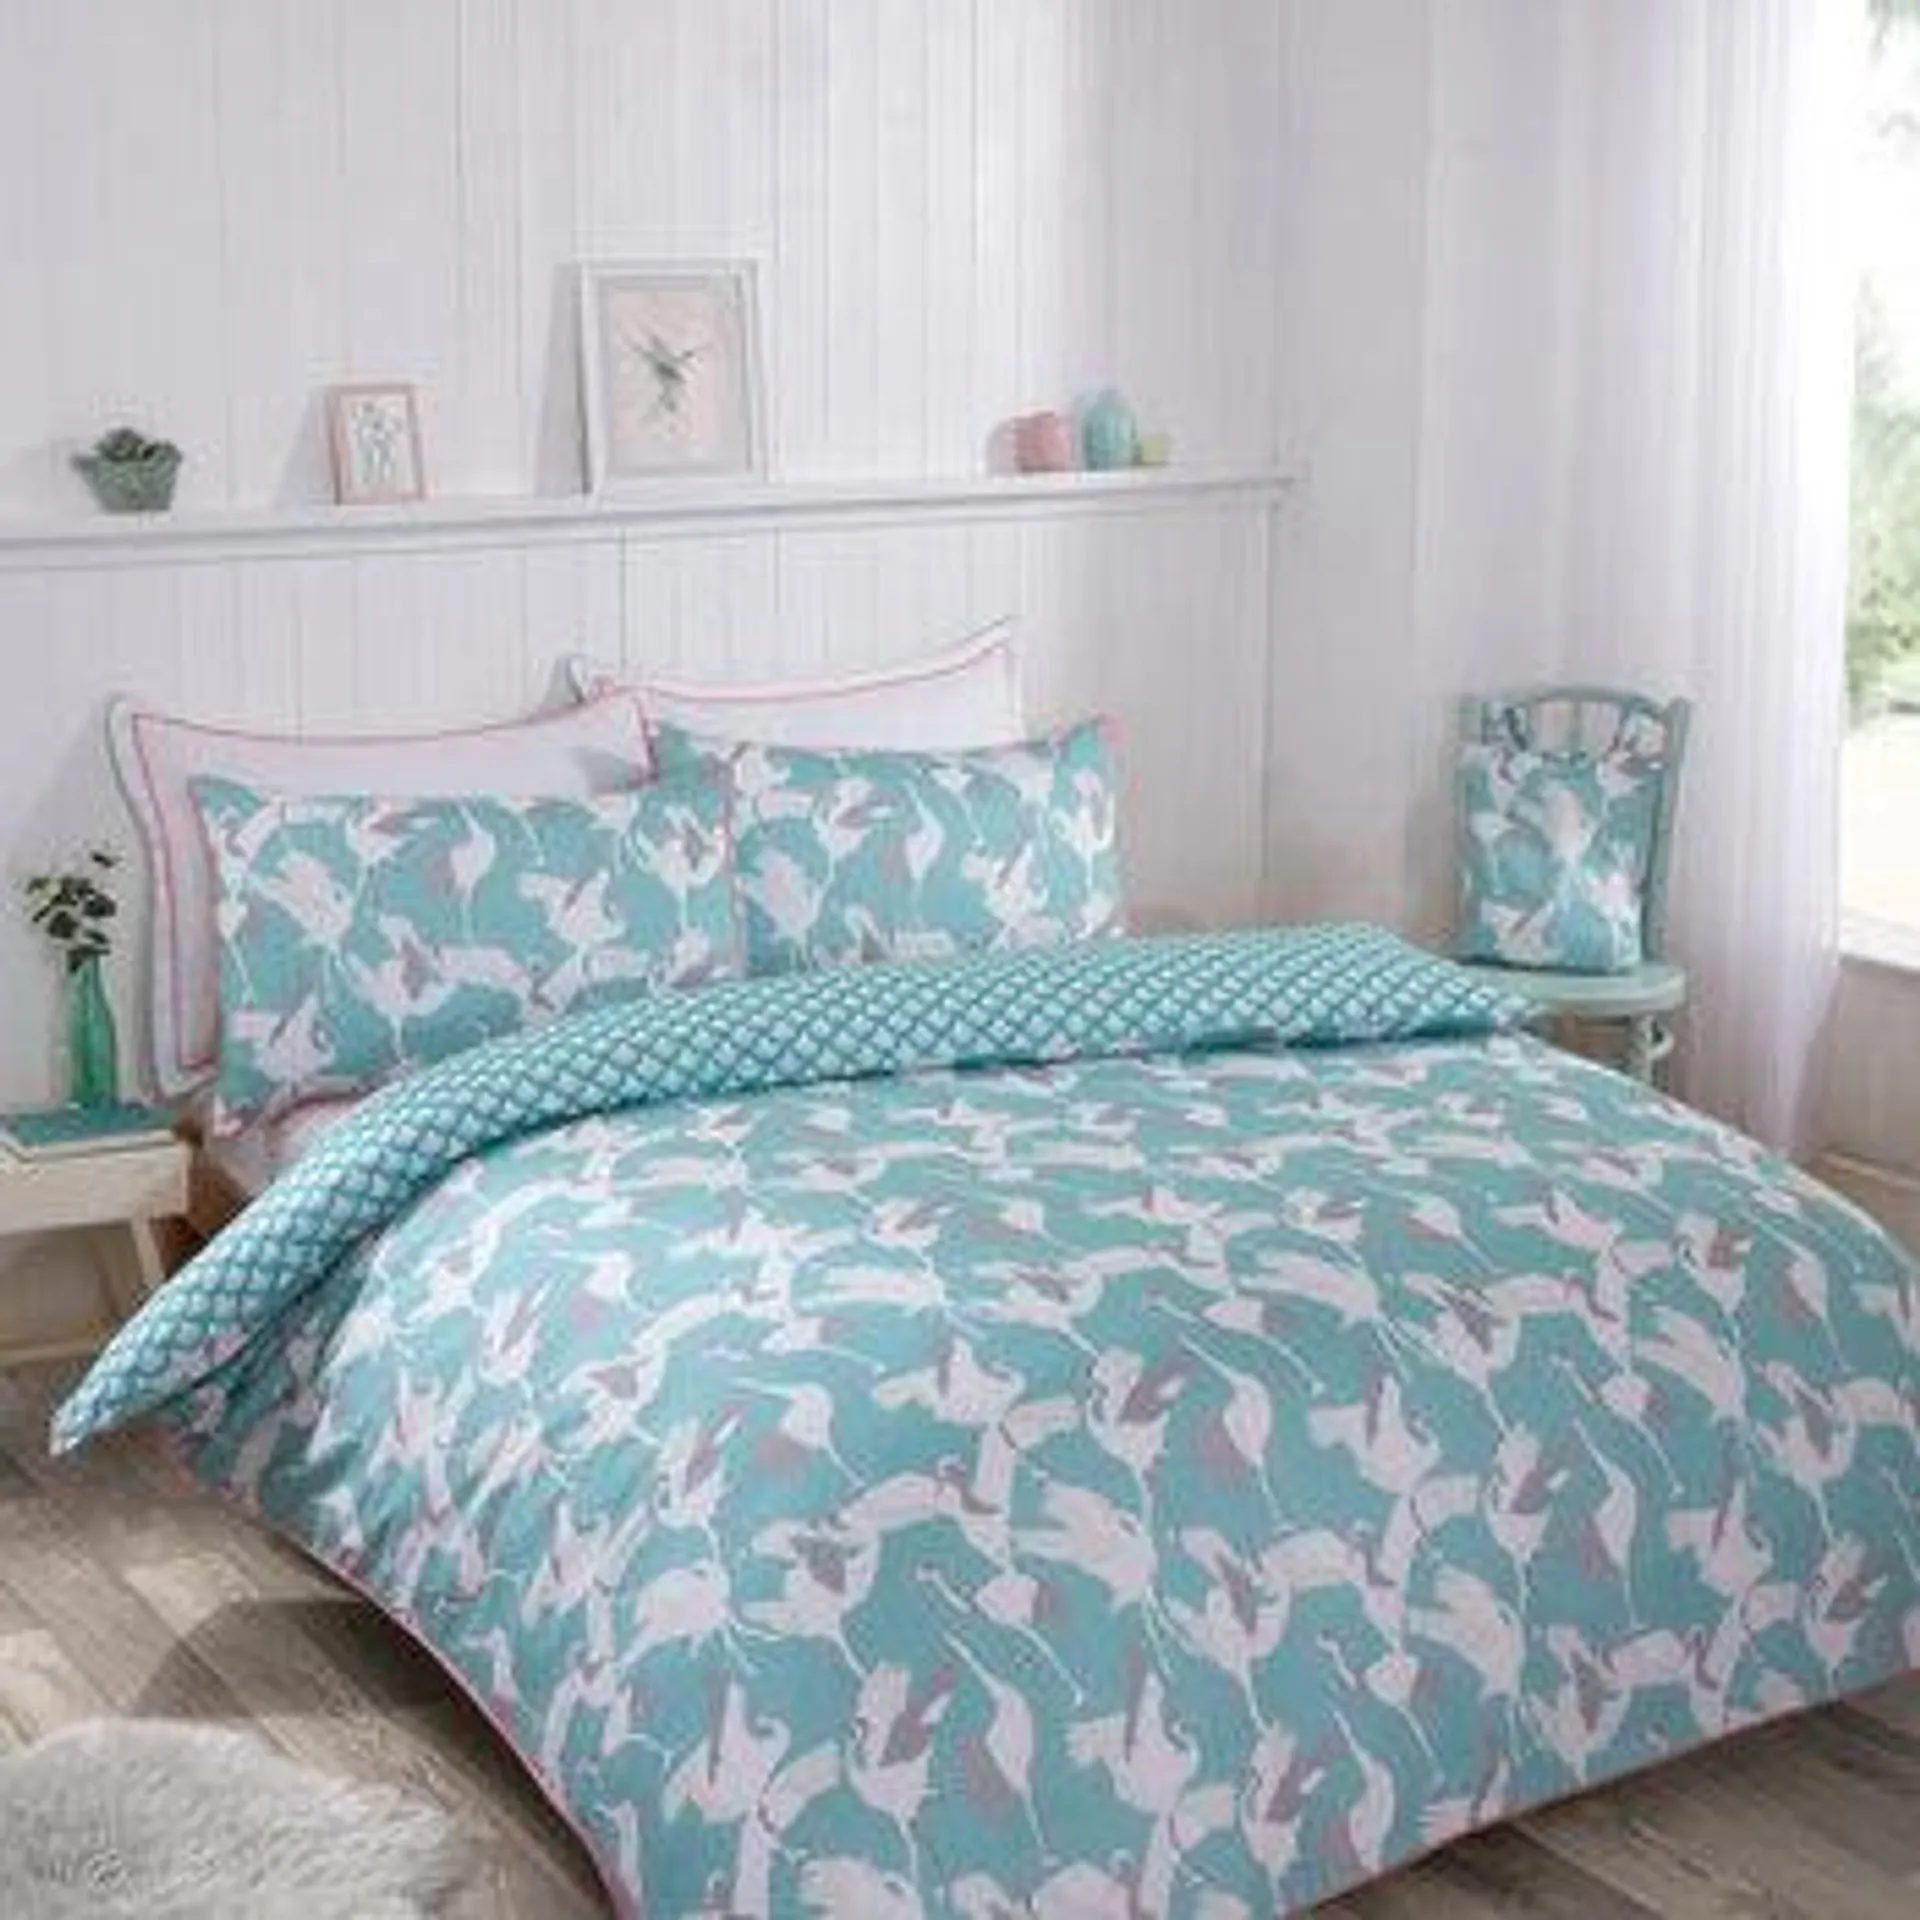 Tabitha Webb Cranes Cotton 3 Piece Bed Set in 4 Sizes